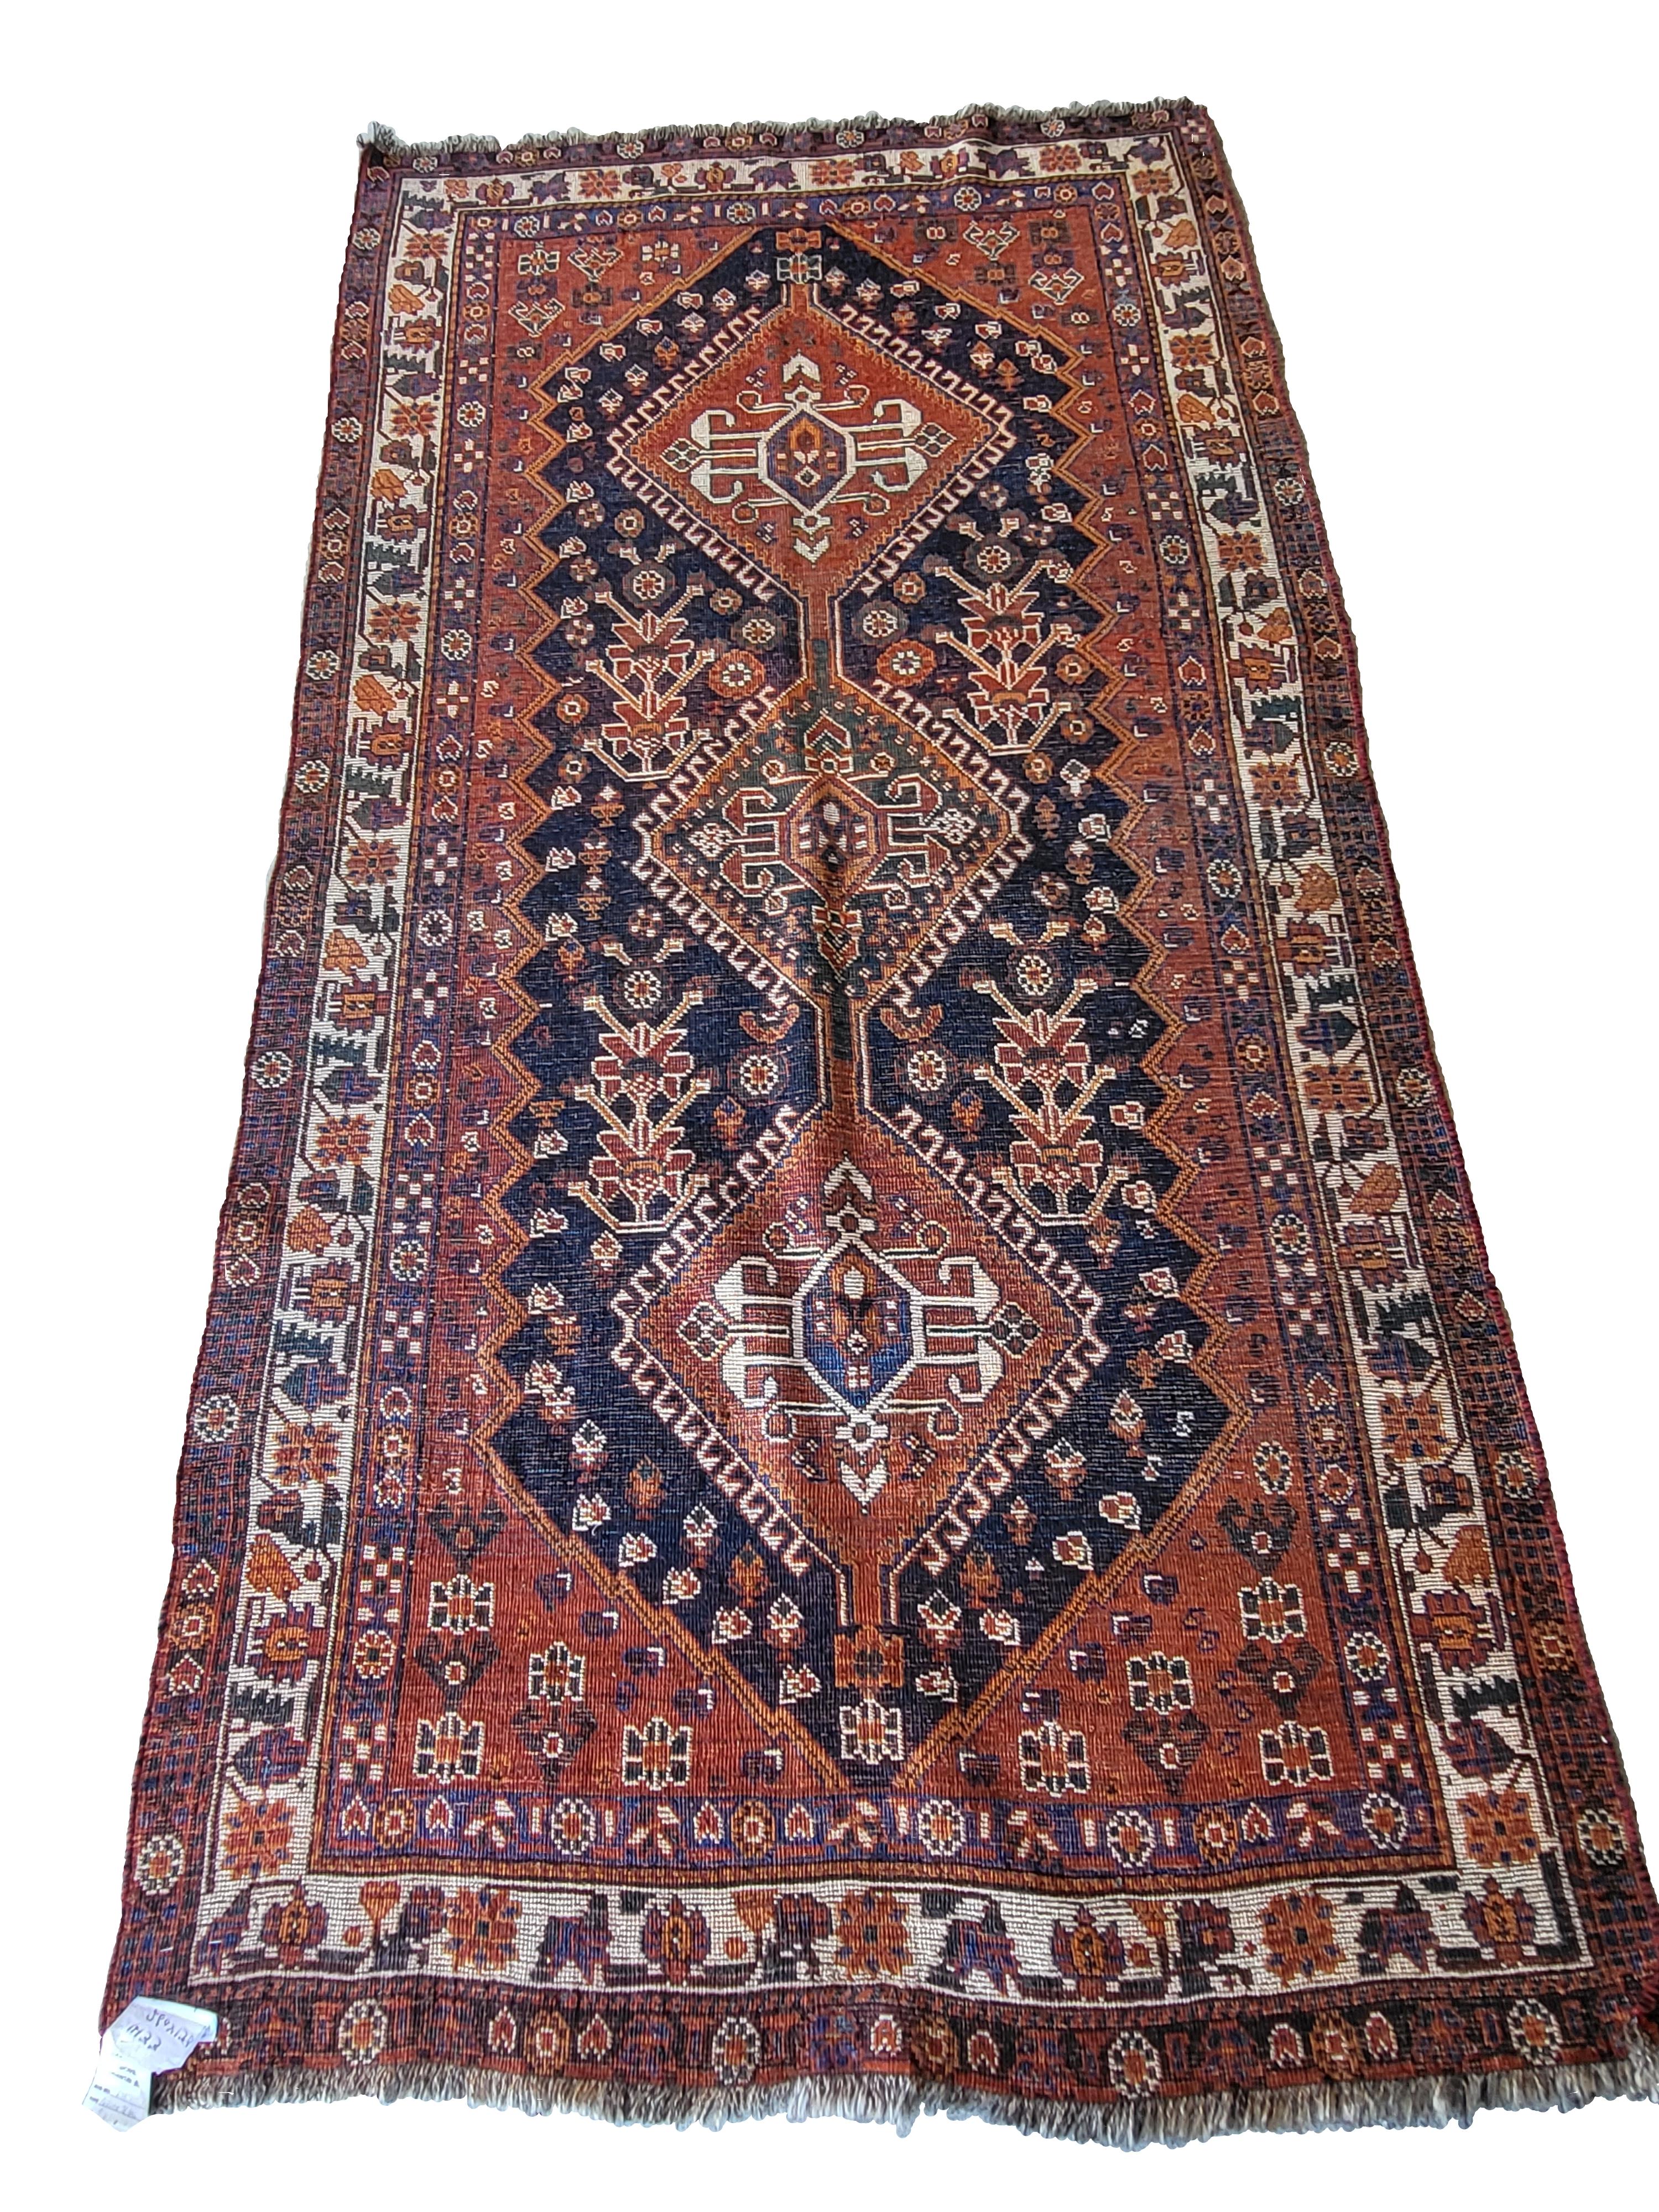 Hand-Knotted Antique Lori - Nomadic Persian Rug - Rust / Orange & Black  For Sale